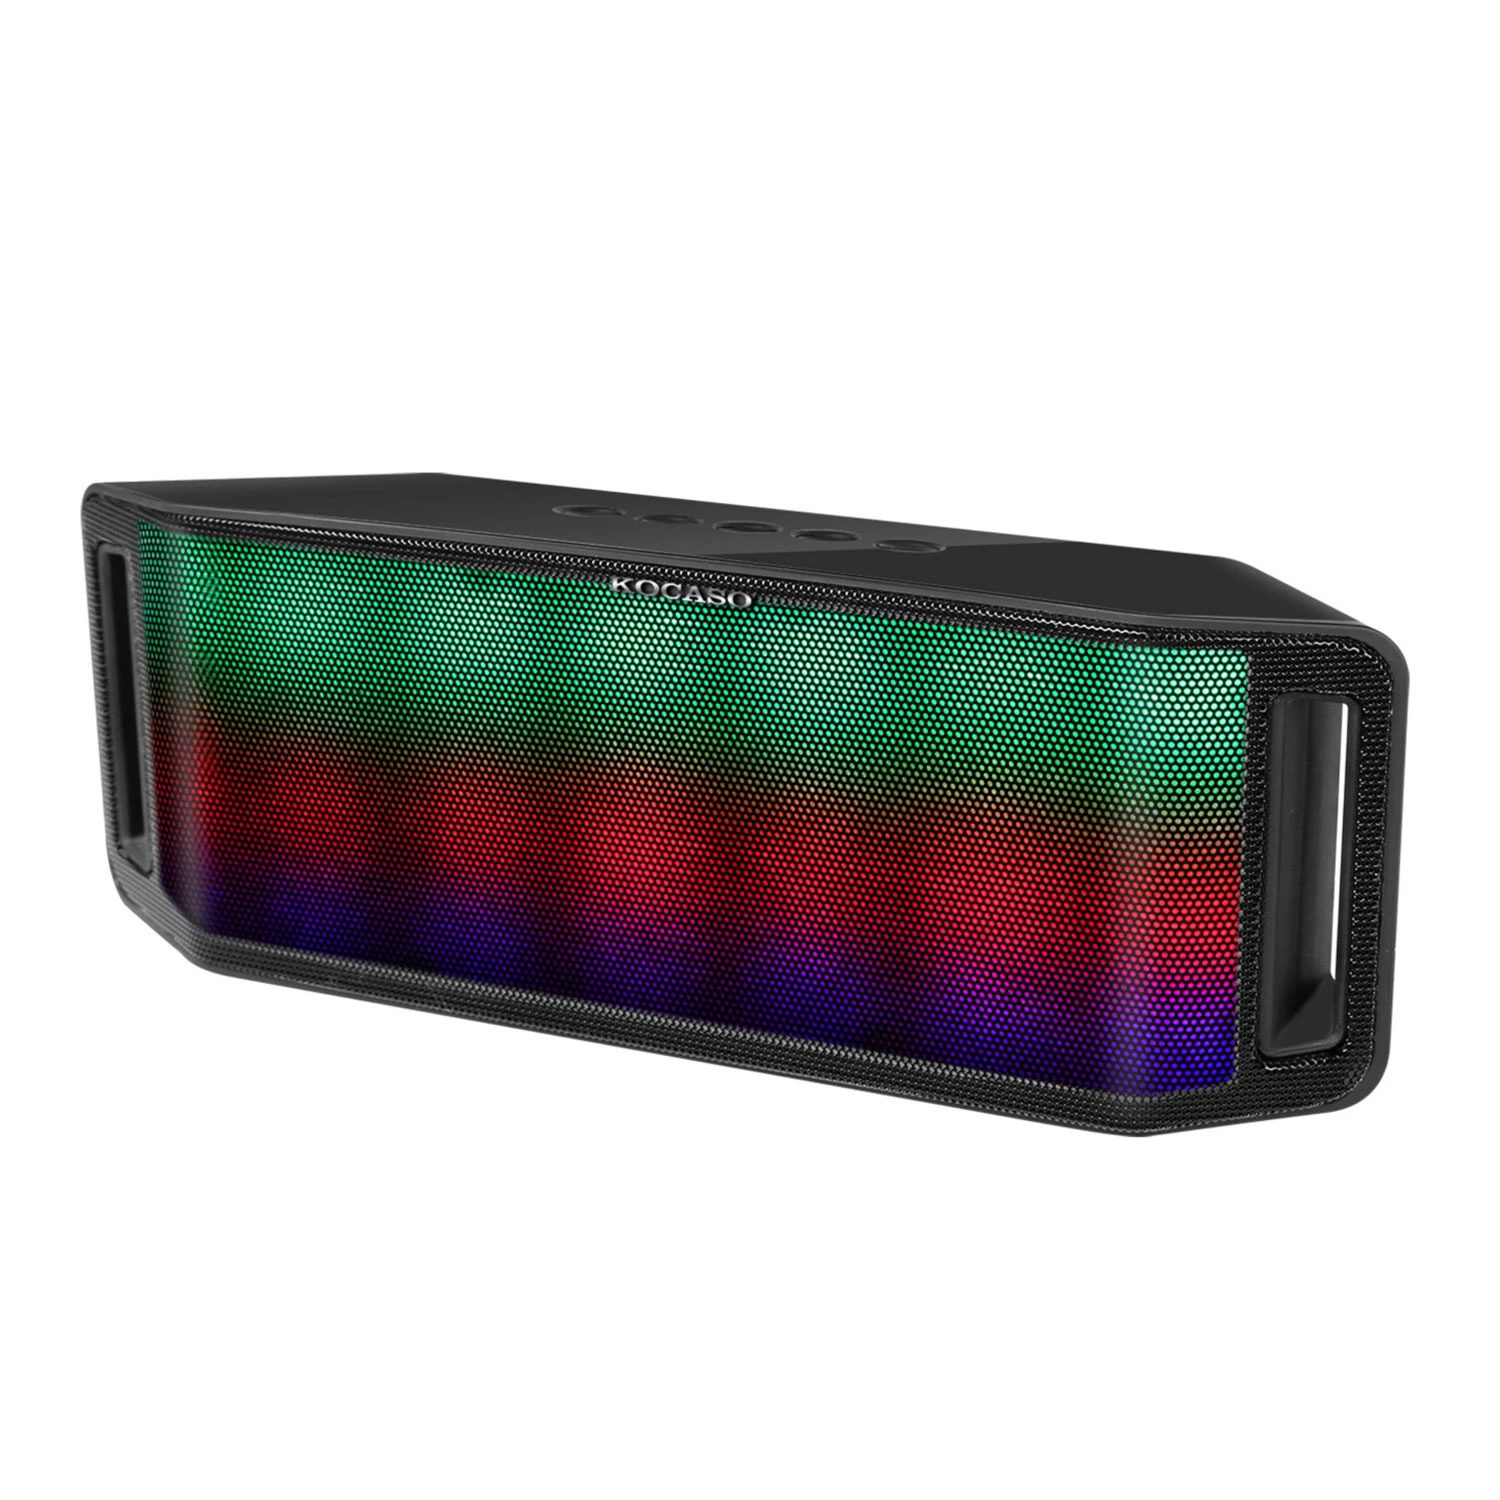 LED Wireless Speaker - Multicolor, Hands-free, FM Radio, USB, MMC